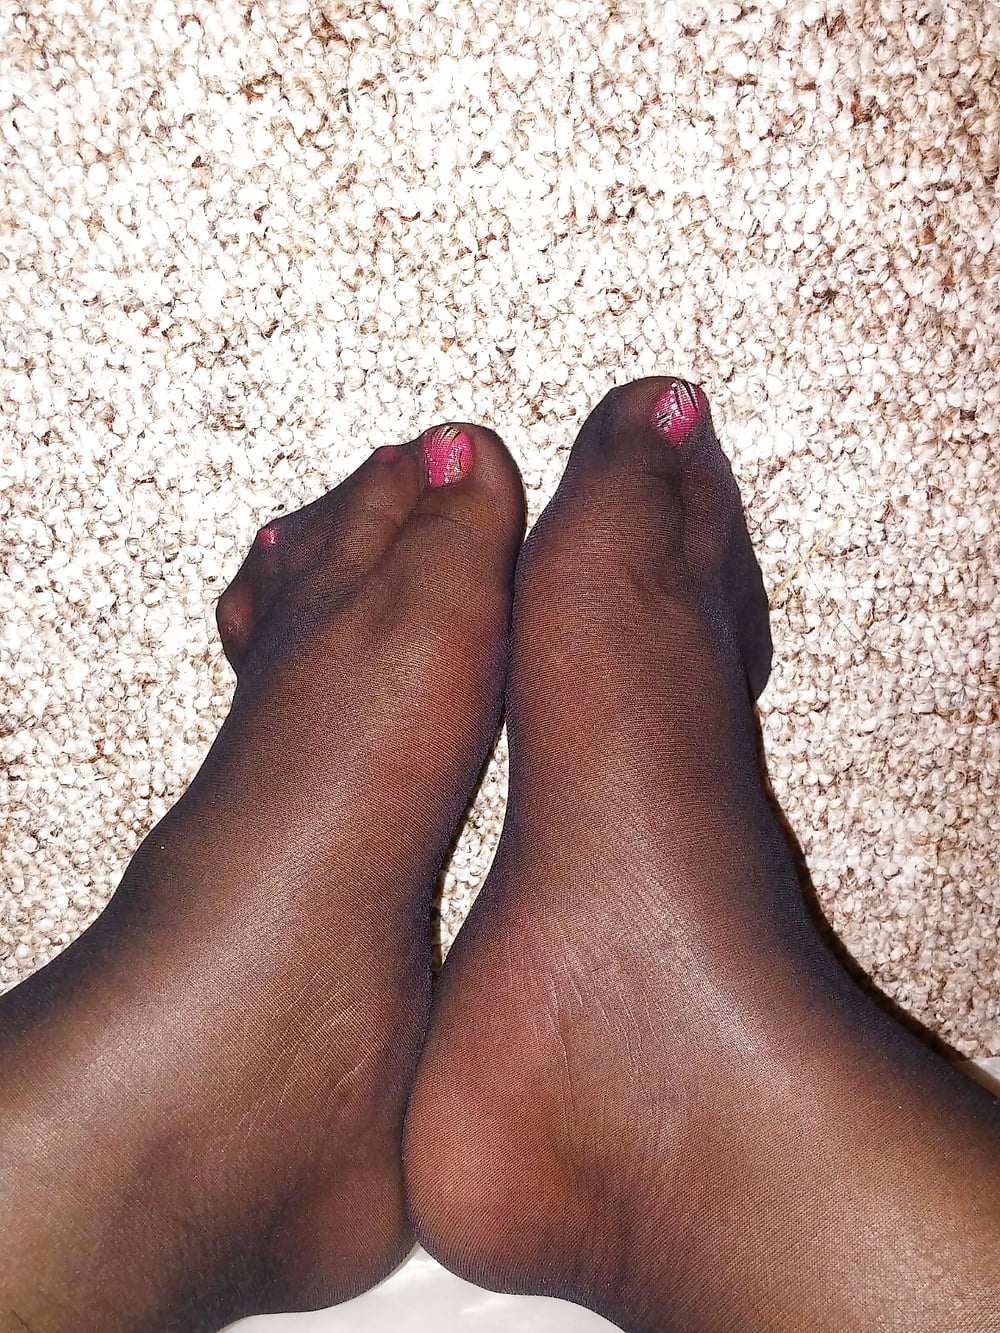 Sex BBW ebony feet in pantyhose image